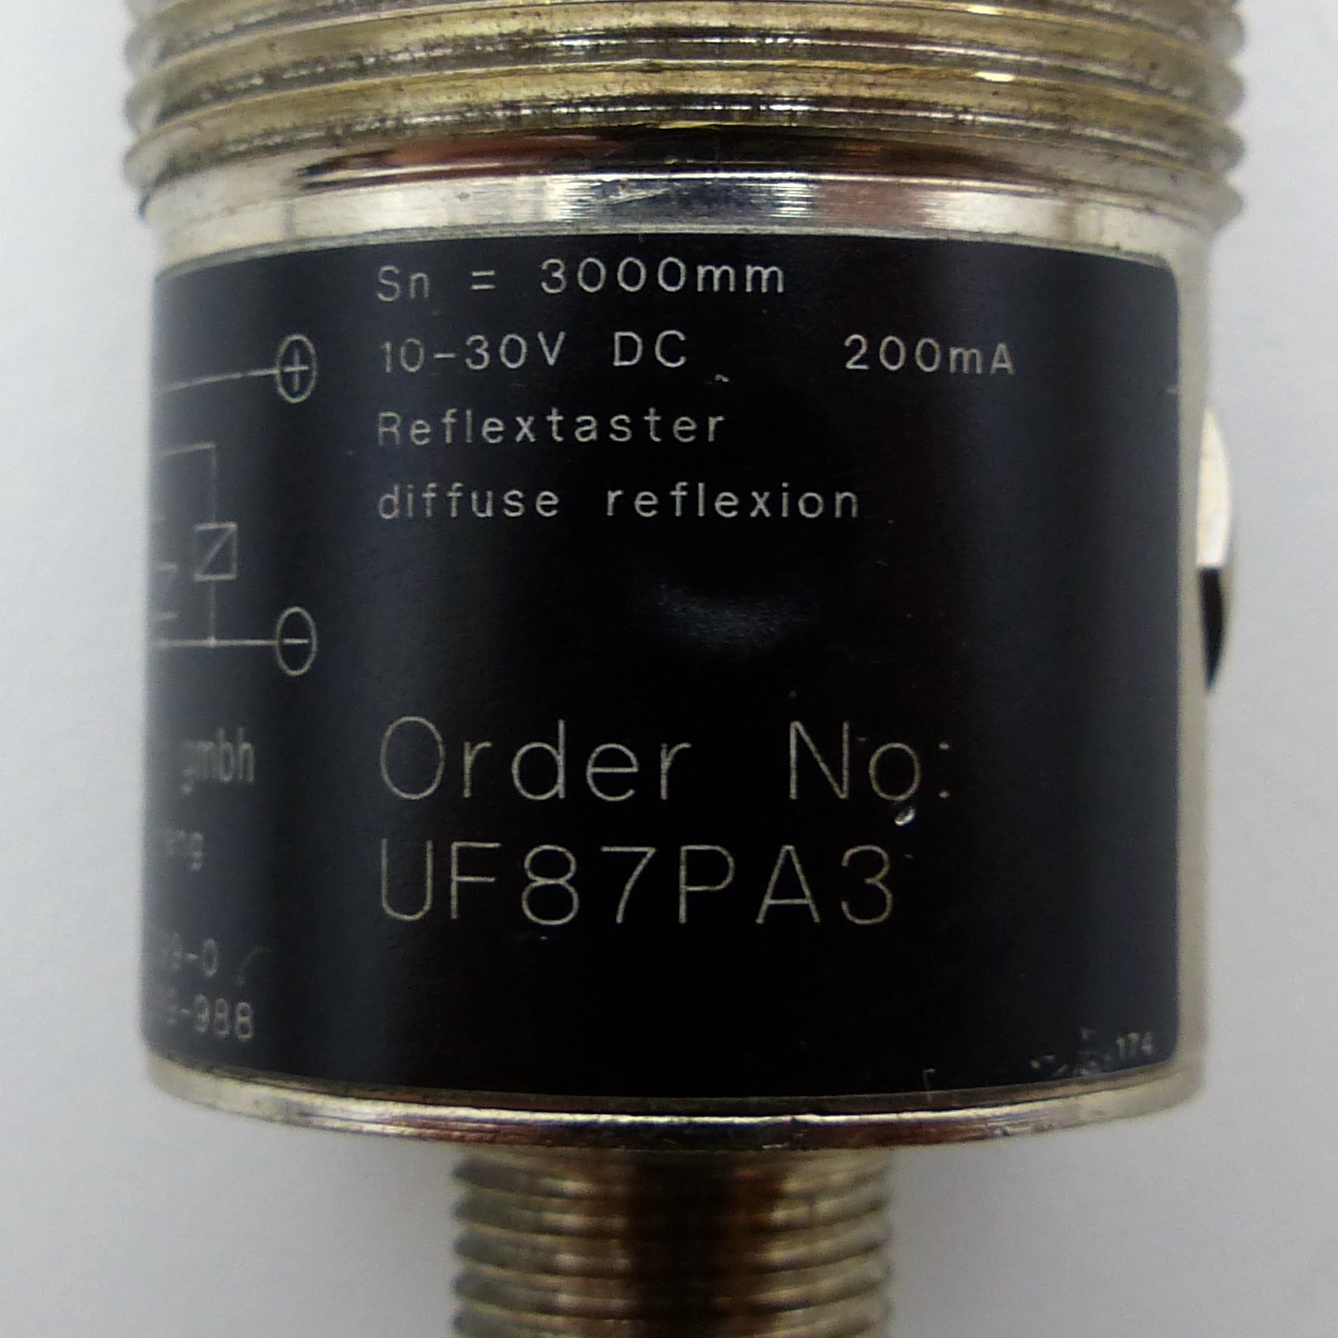 Reflextaster UF87PA3 